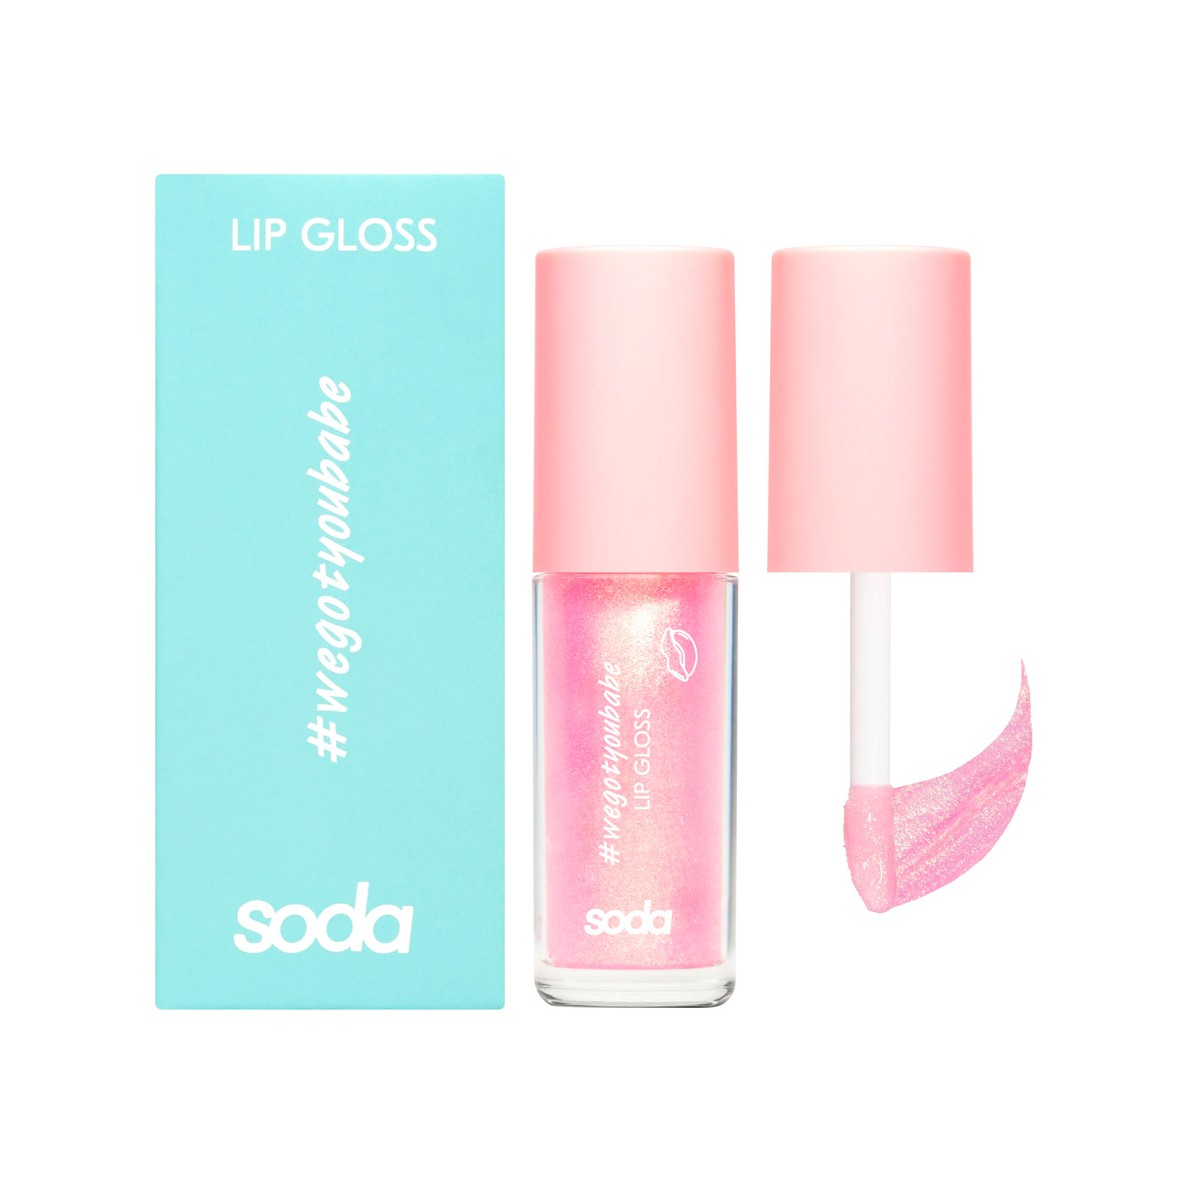 Maquillaje Vegano al mejor precio: Soda Glitter Lip Gloss Peach Queen 103 de Soda Makeup en Skin Thinks - 